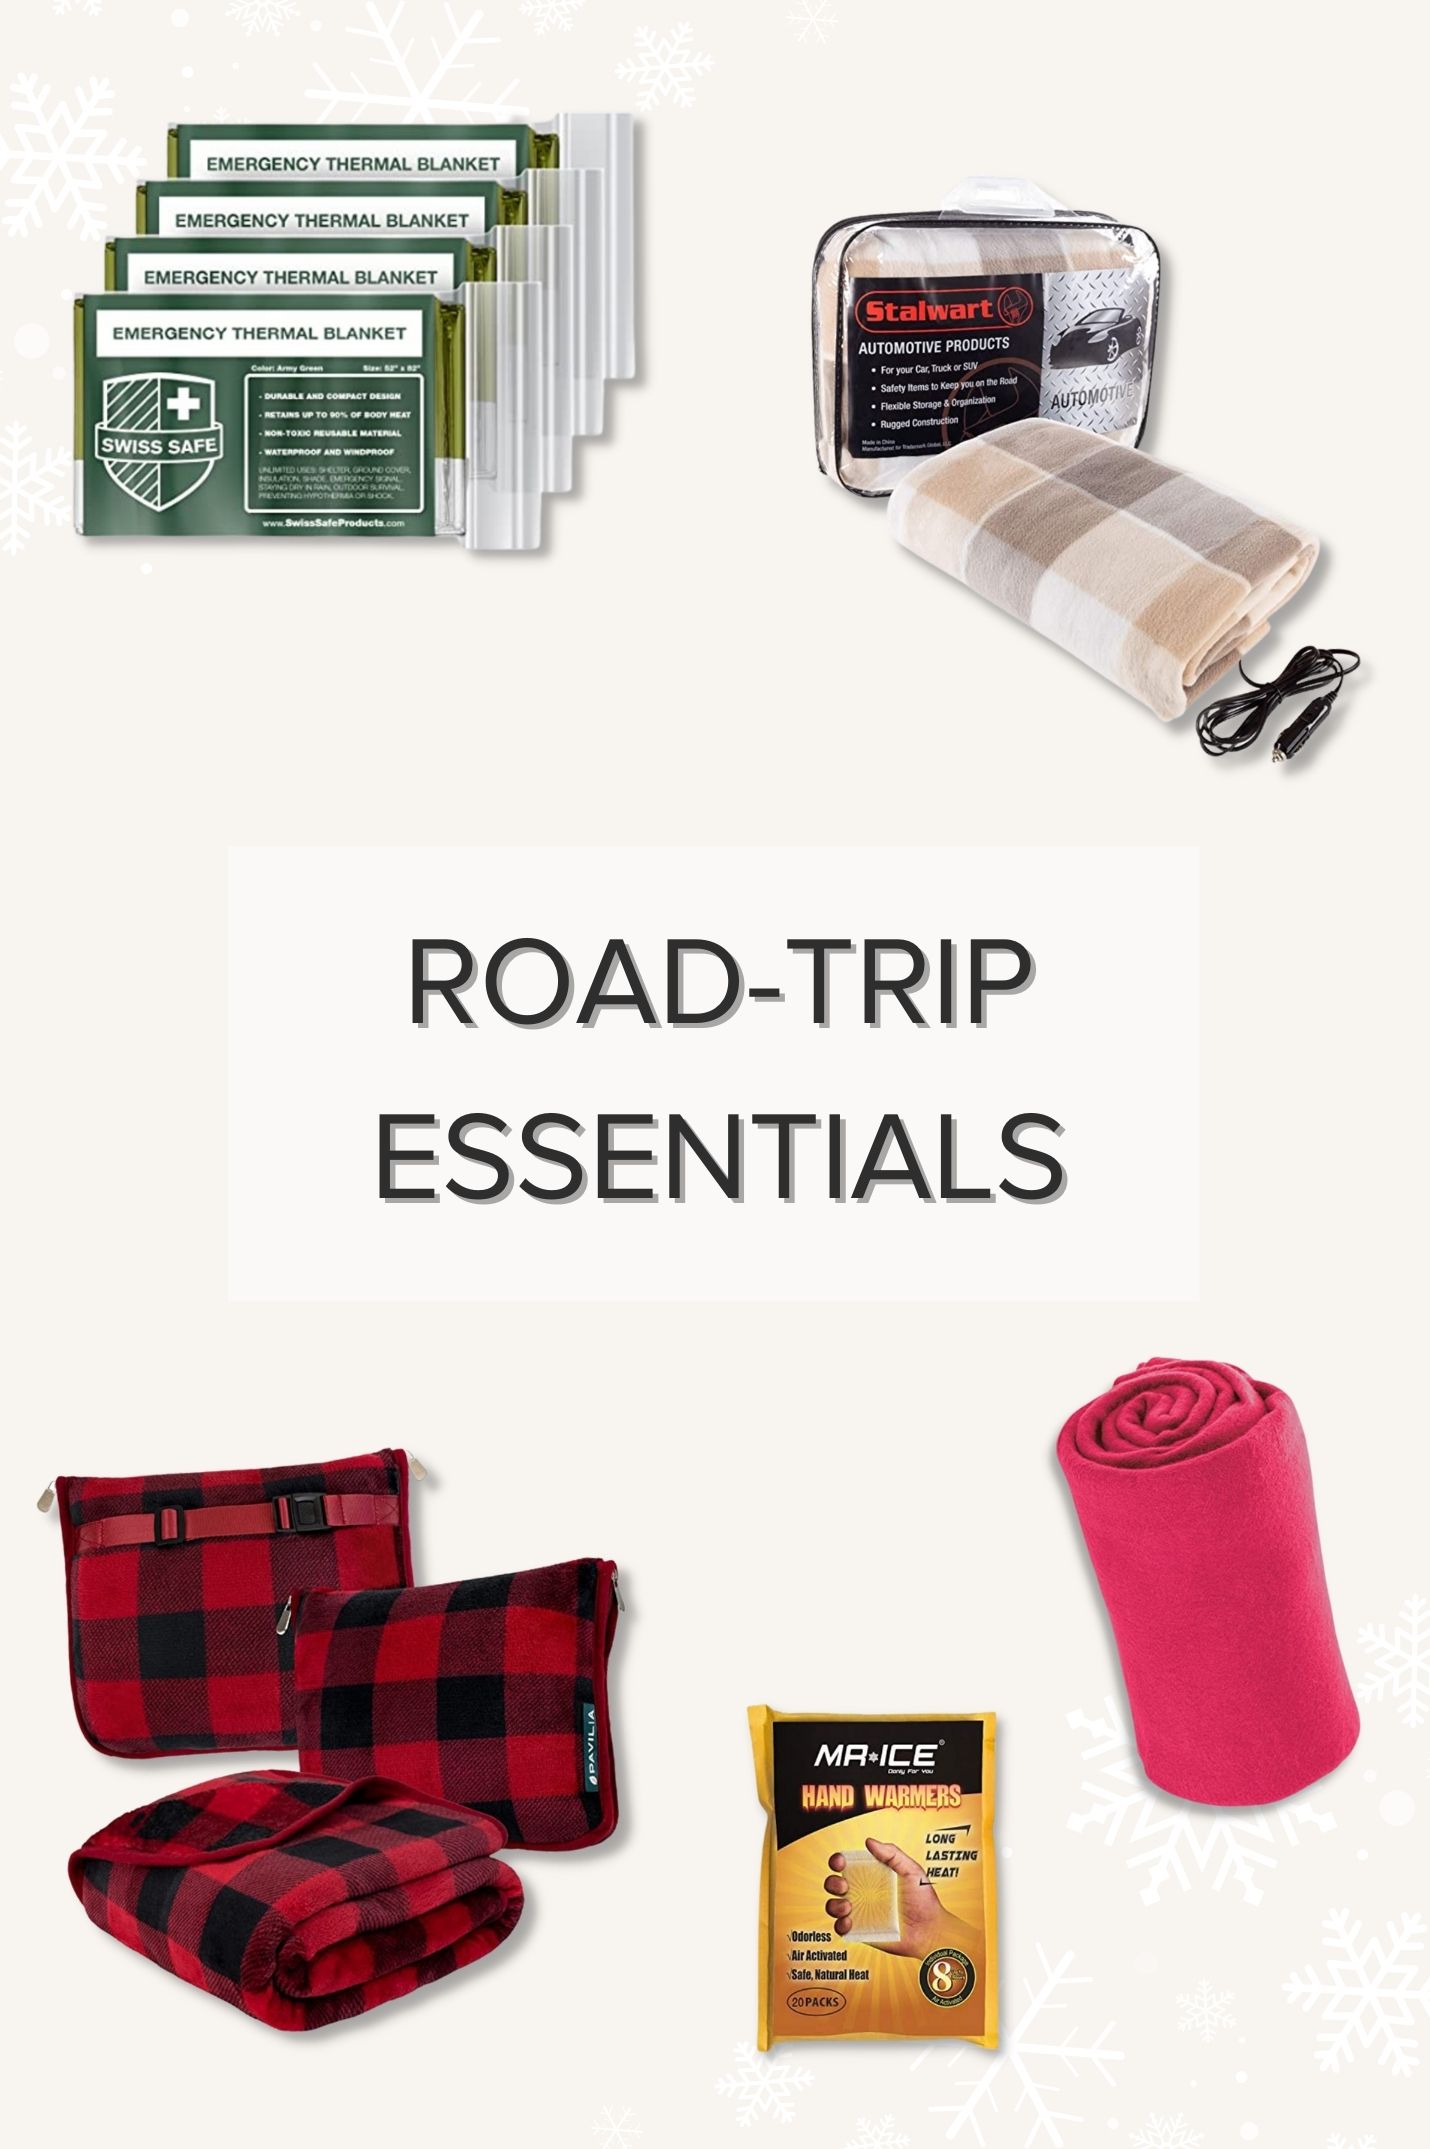 Road Trip Essentials for Winter